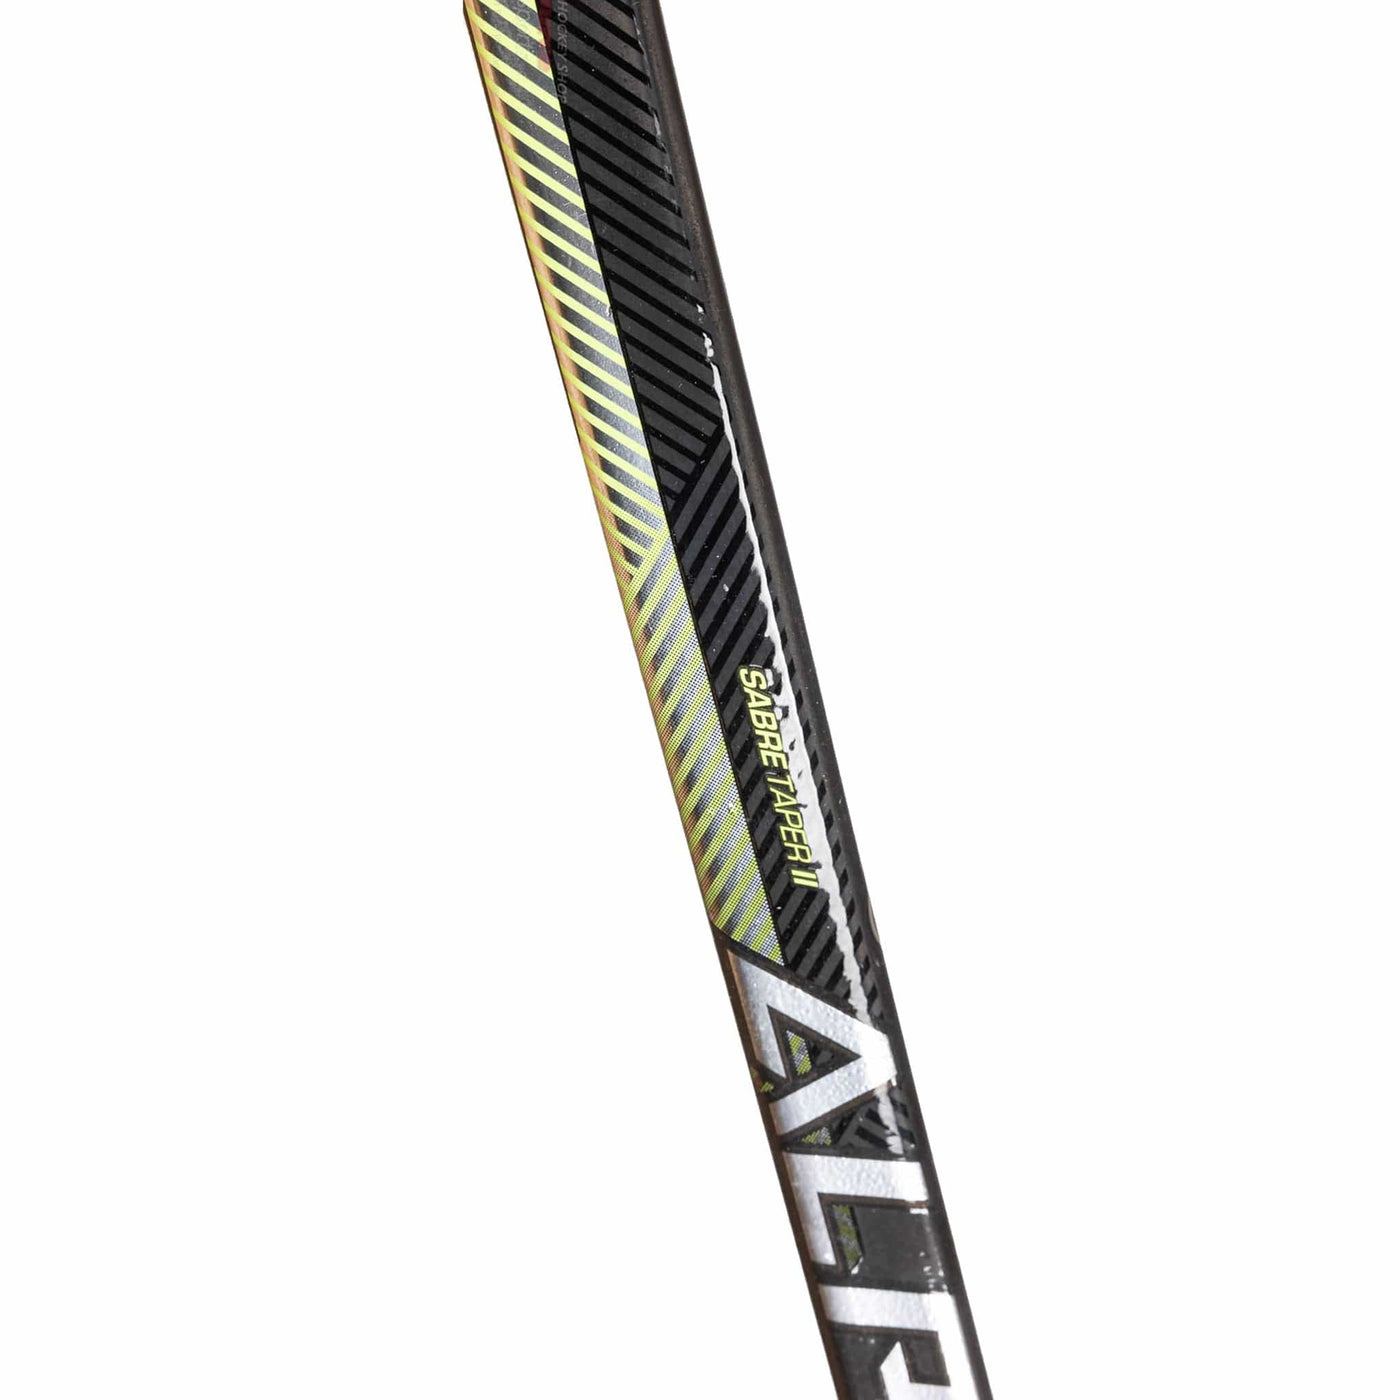 Warrior Alpha LX Pro Junior Hockey Stick